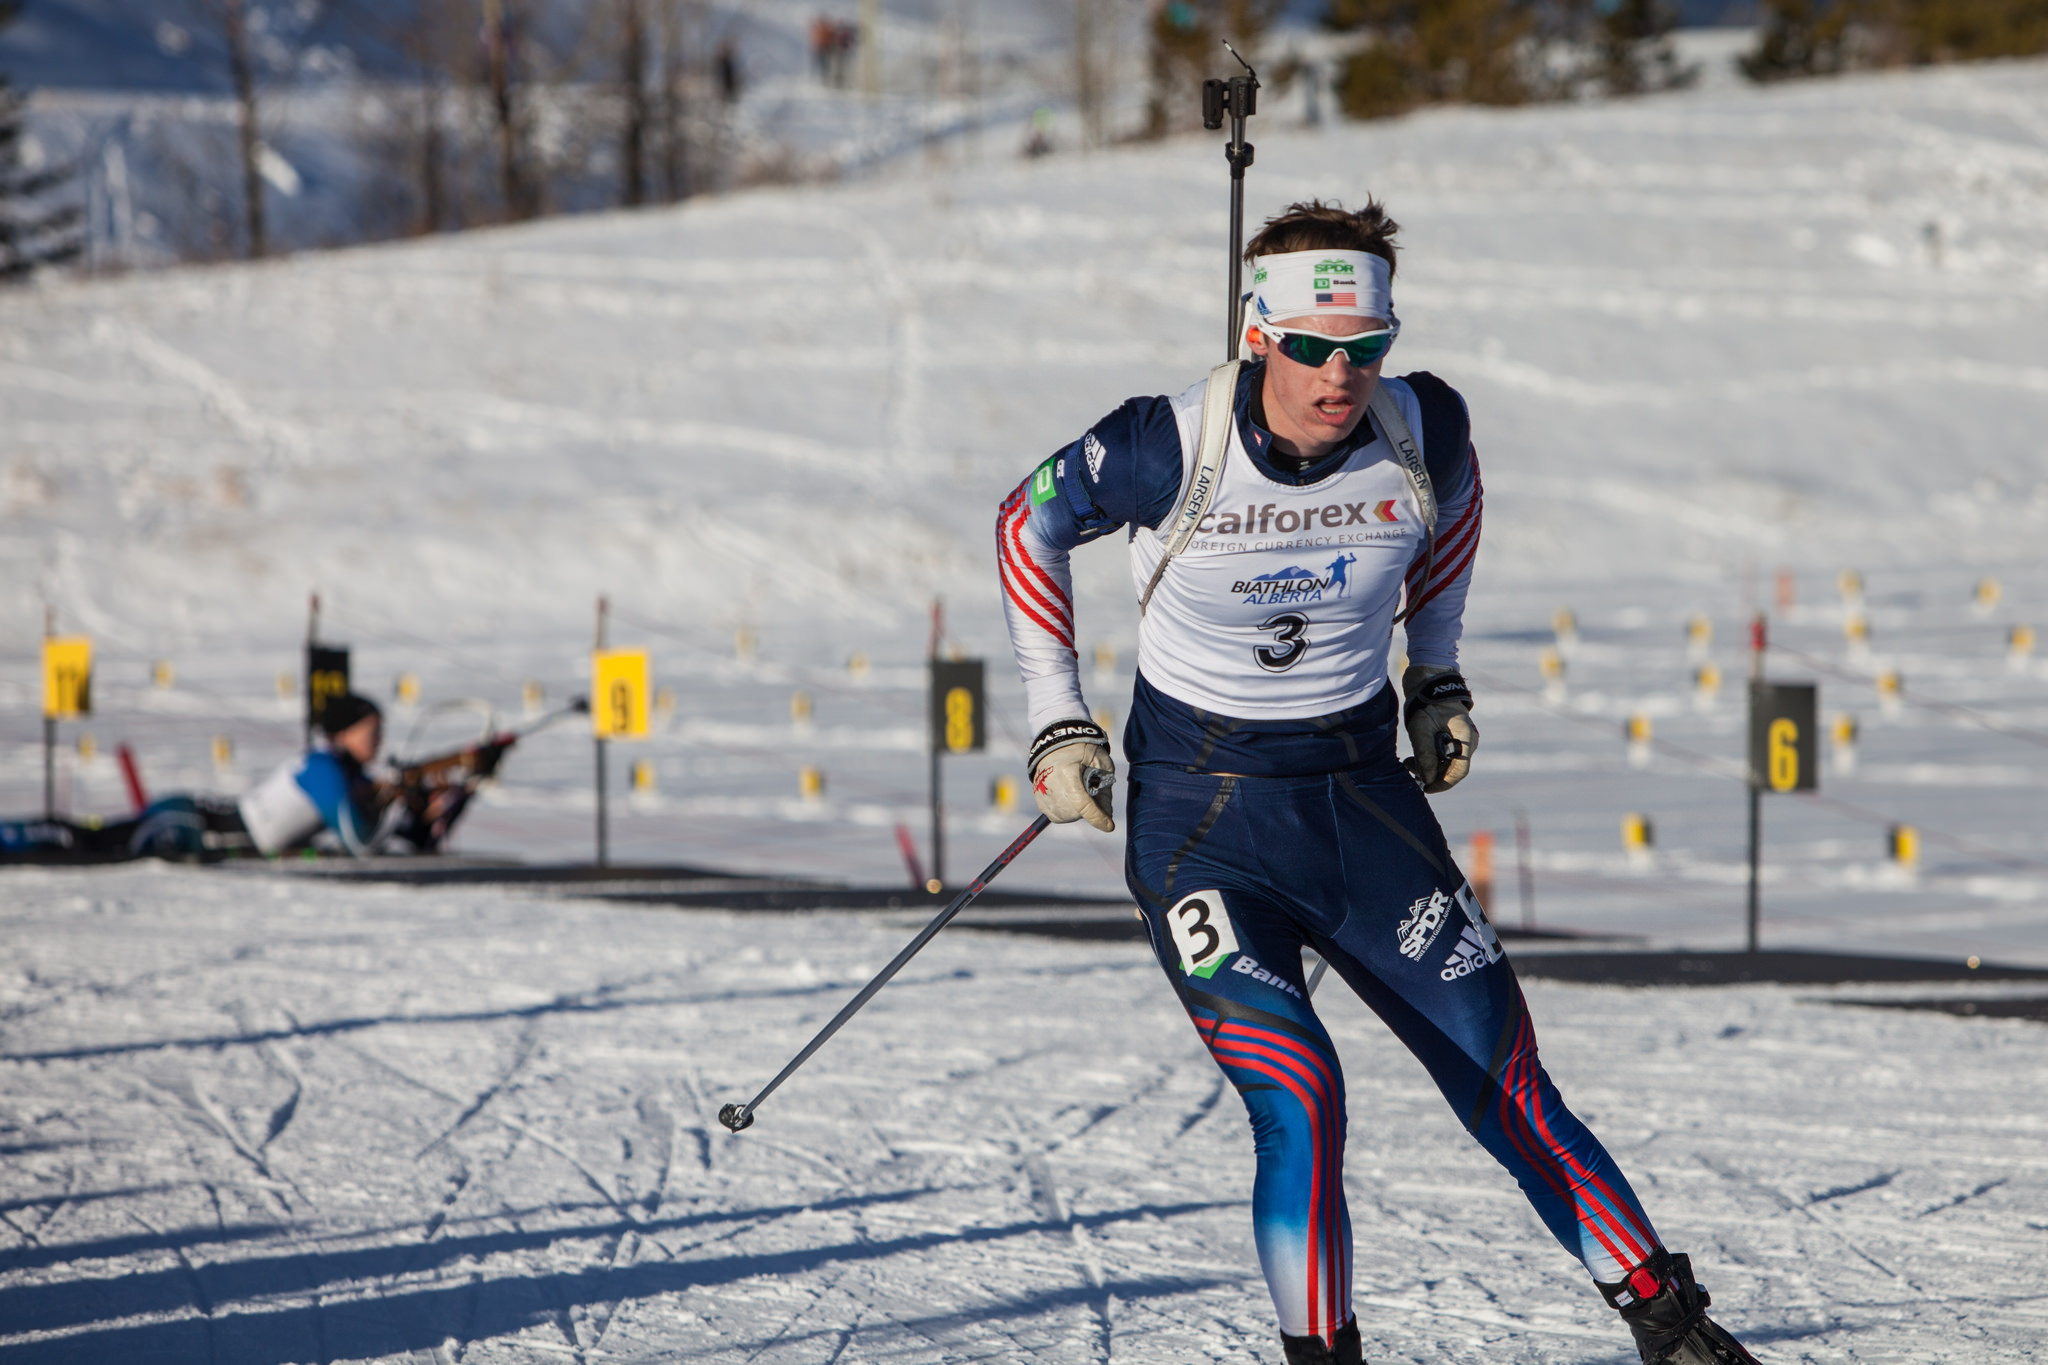 Former US Biathlon development skier Paul Everett (Methow Valley Biathlon) racing in December 2014.